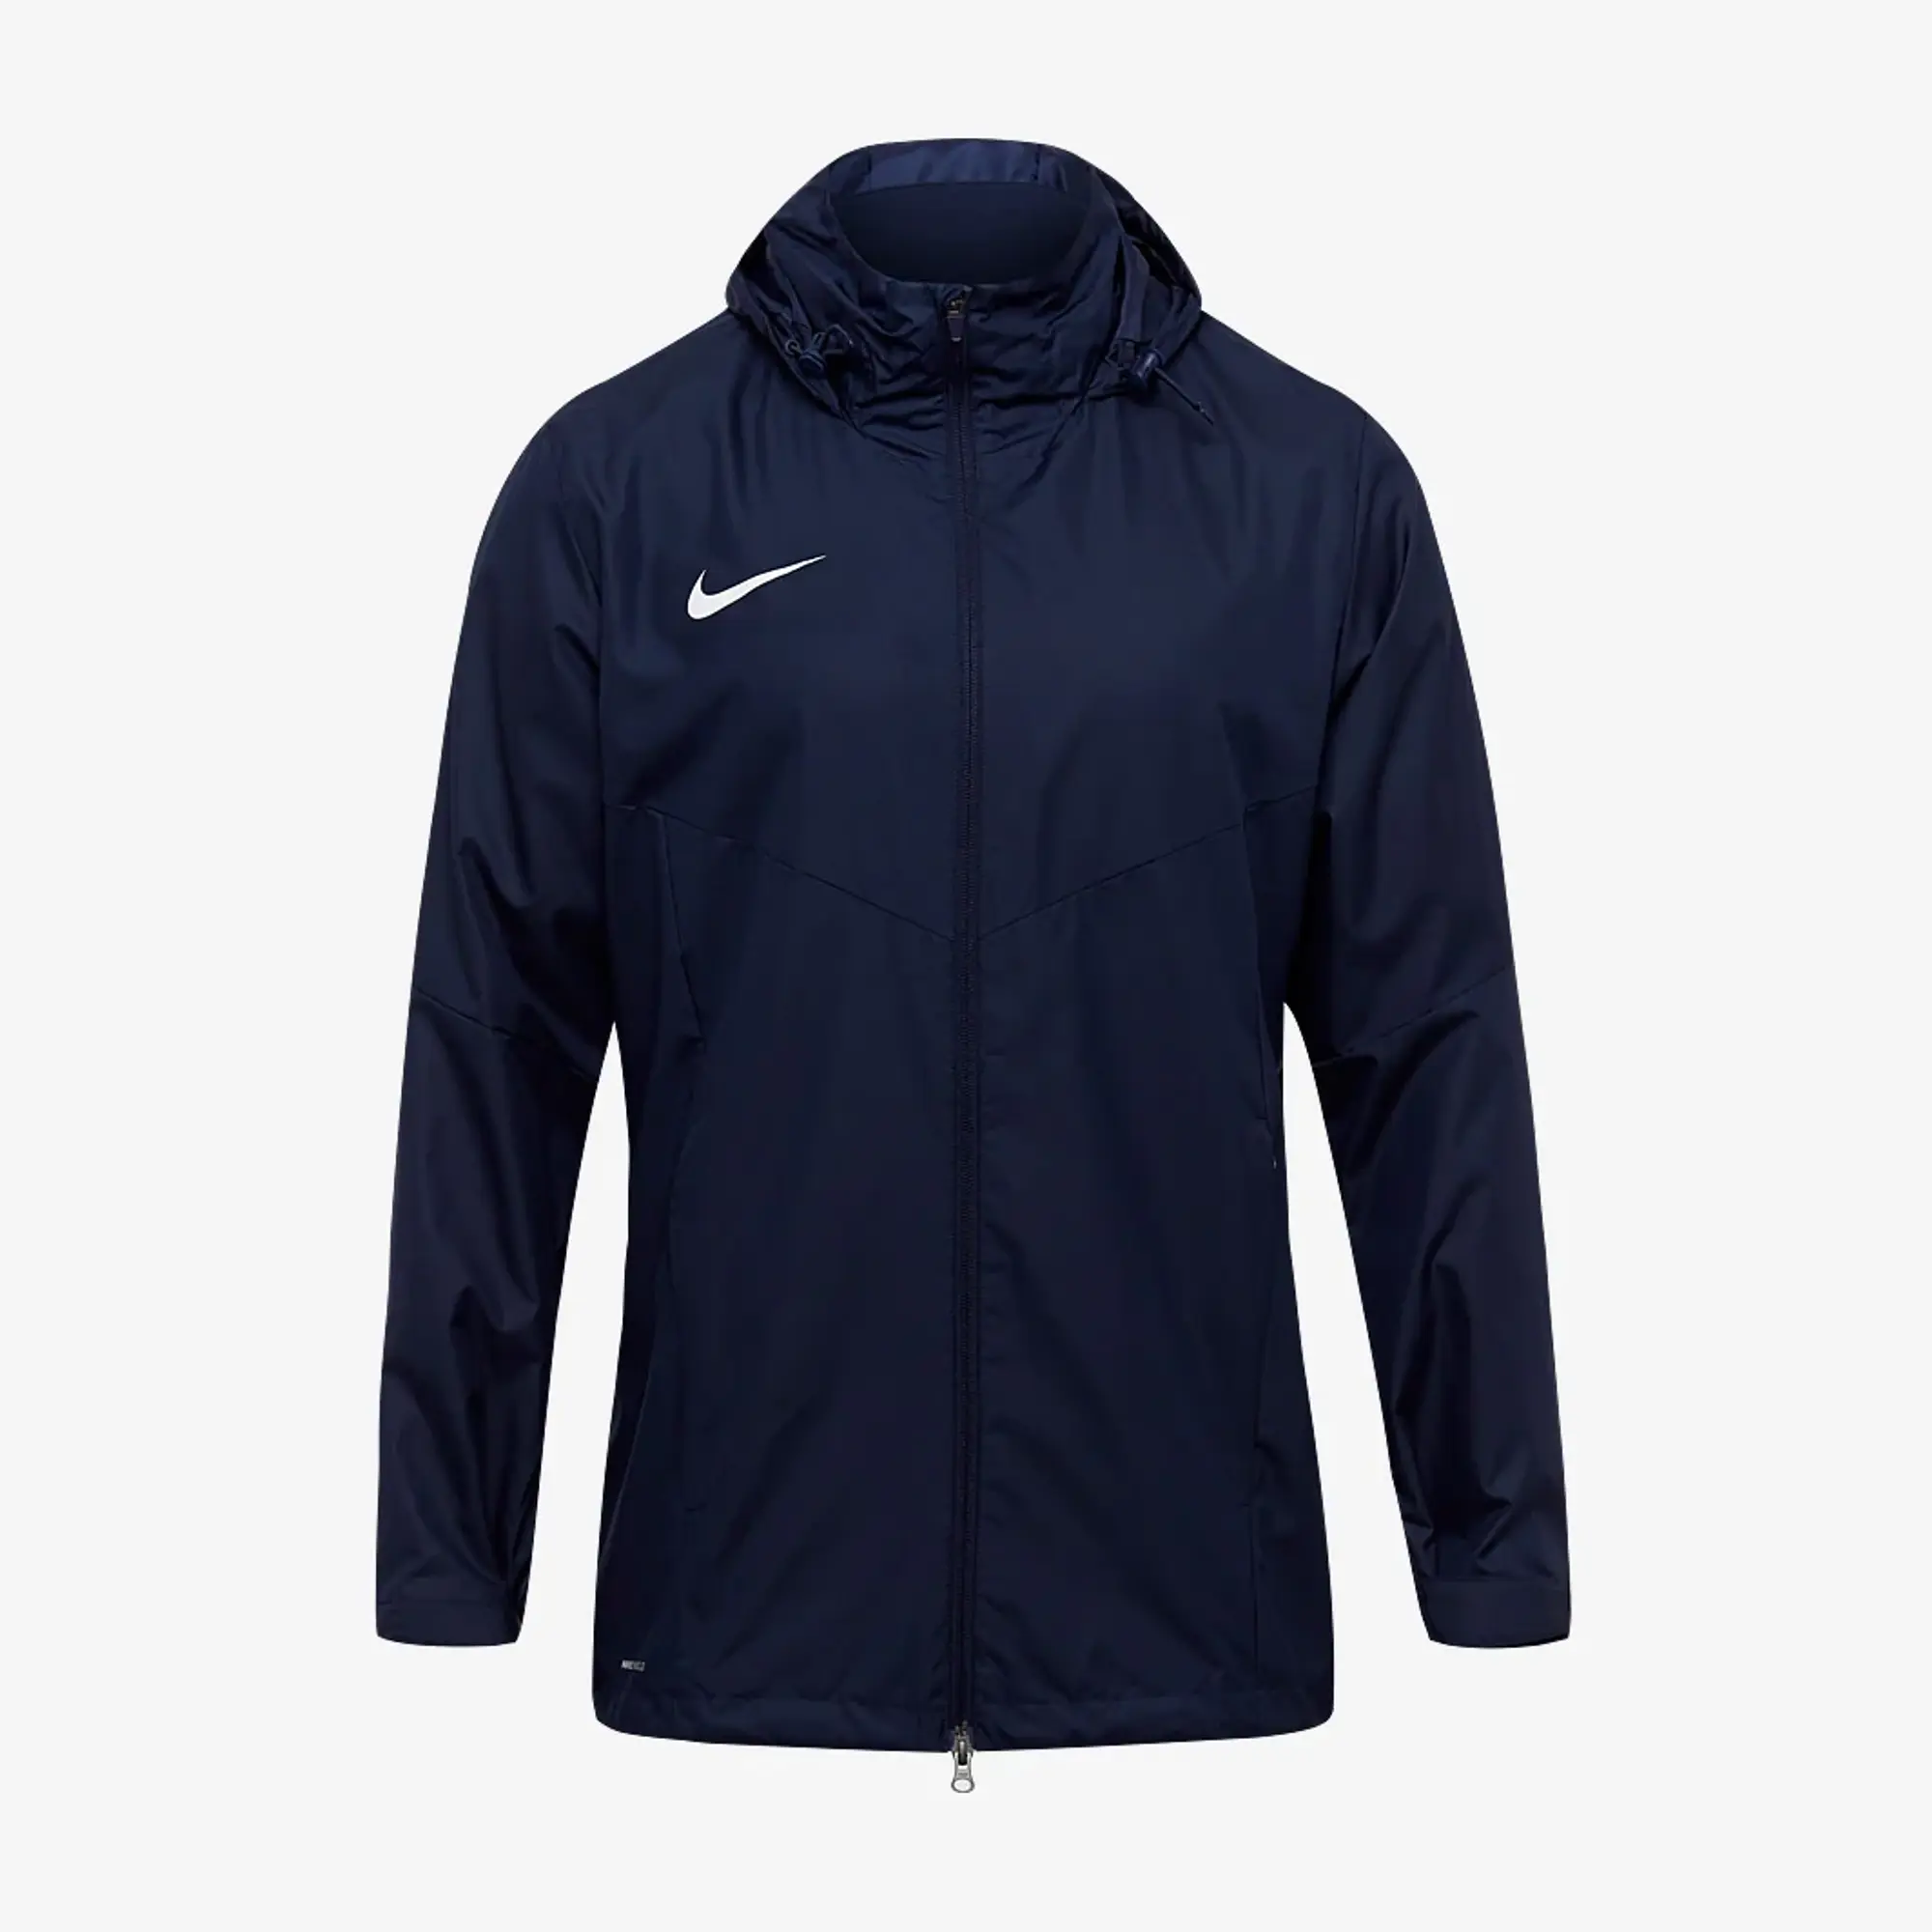 Nike Academy 18 Rain Jacket